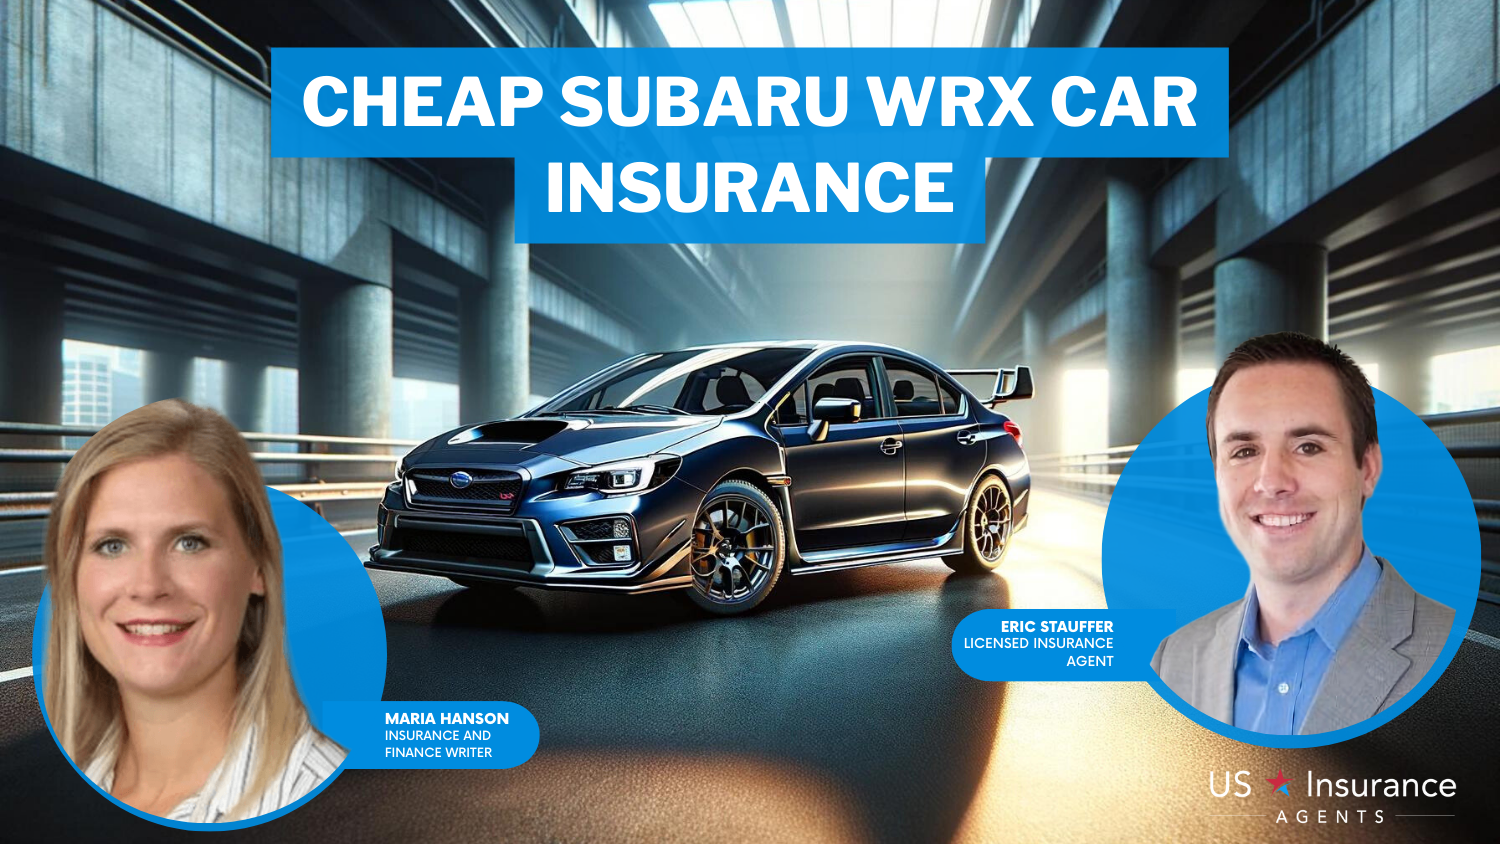 Cheap Subaru WRX Car Insurance: Travelers, The Hartford, and Progressive